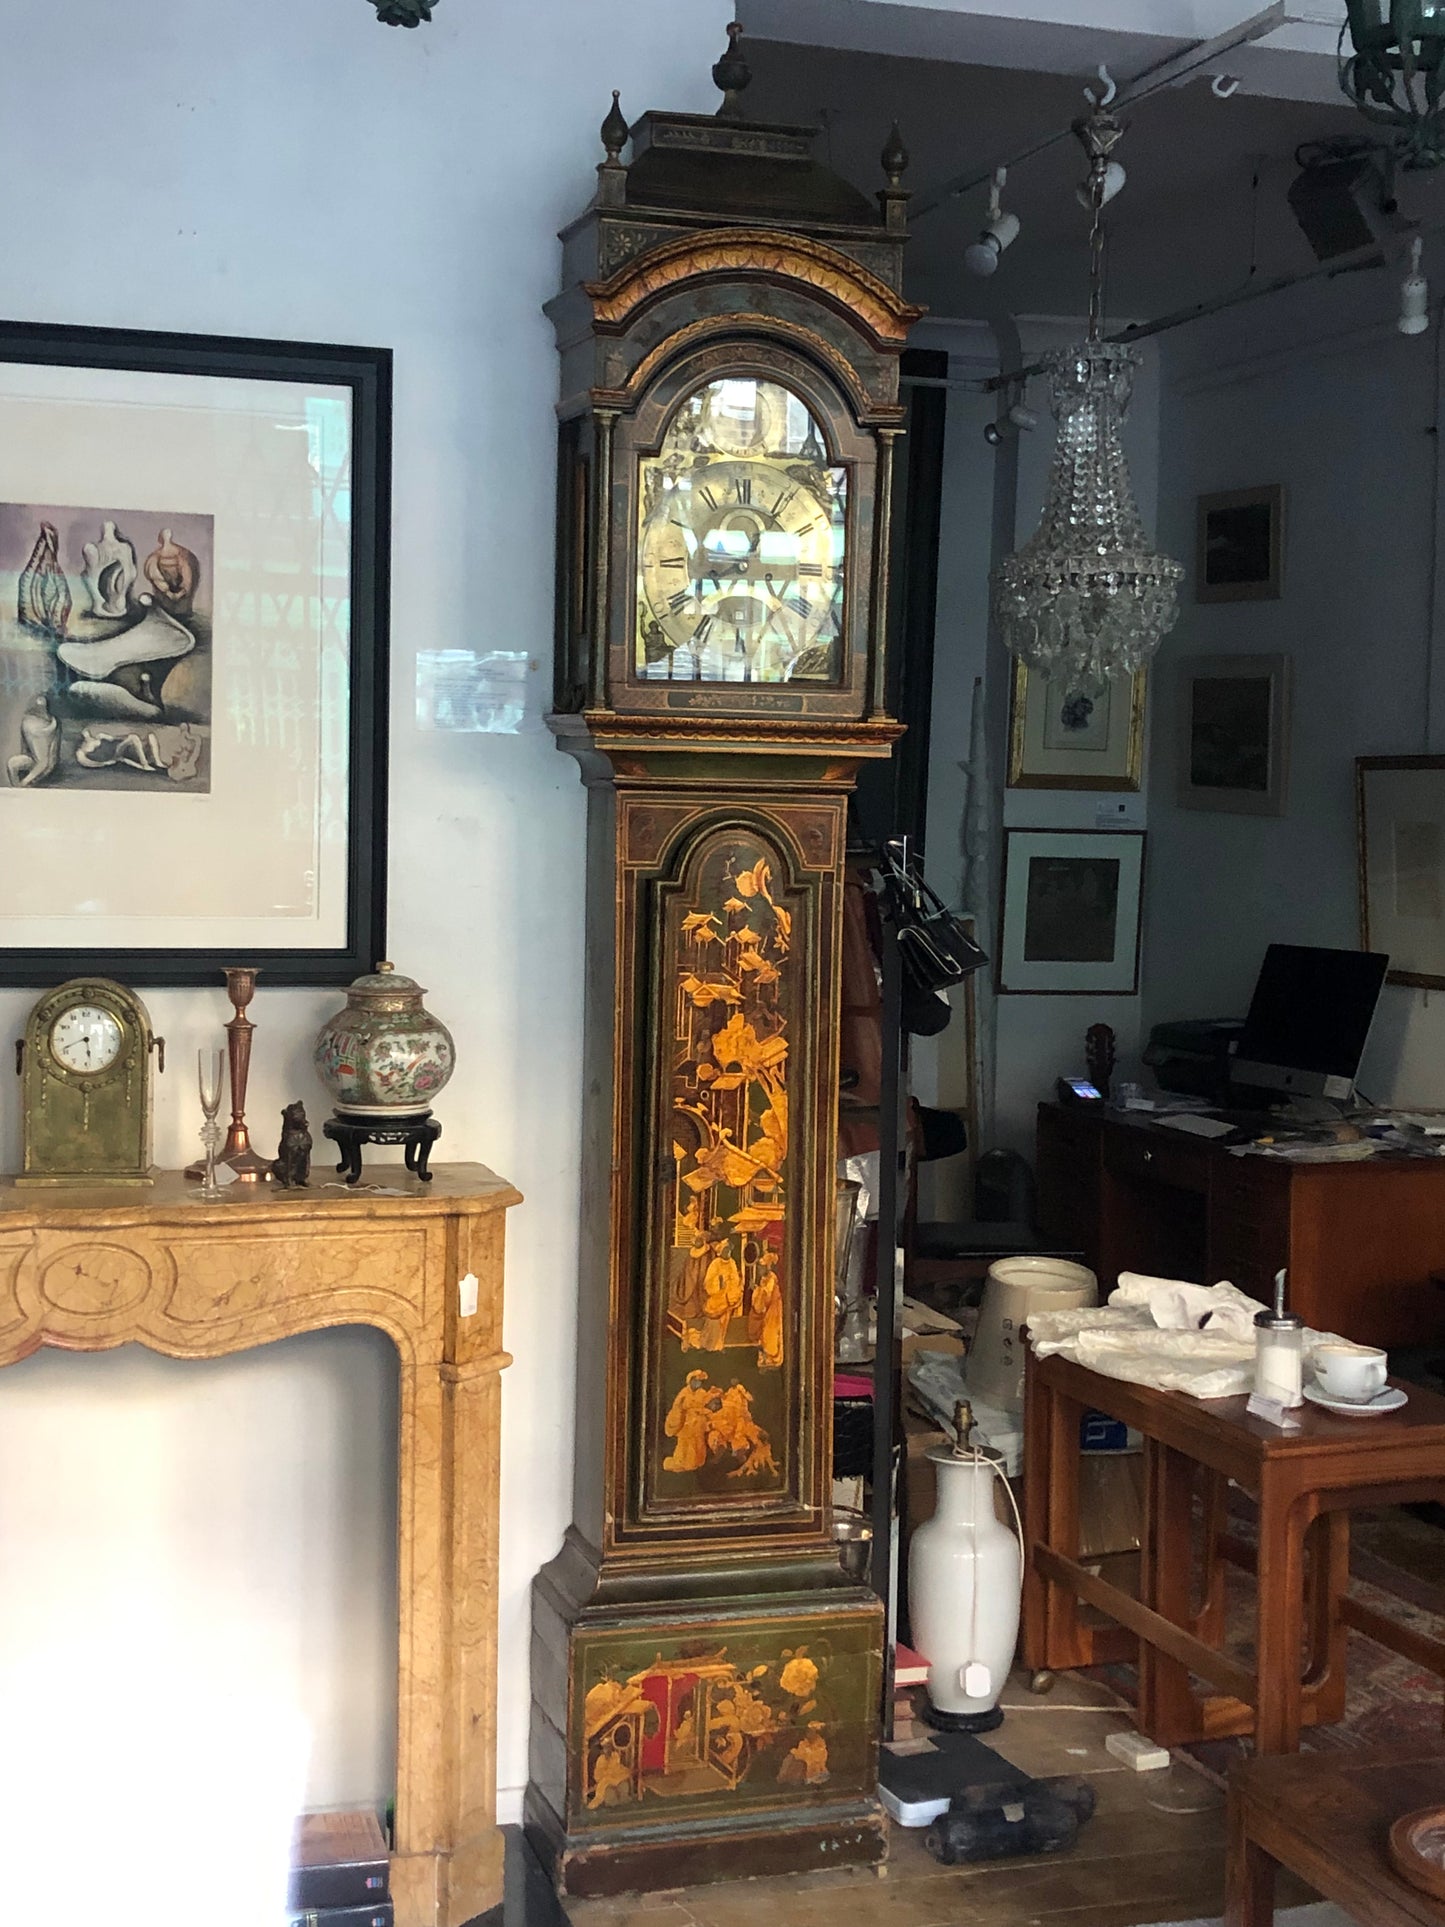 1750s long case clock